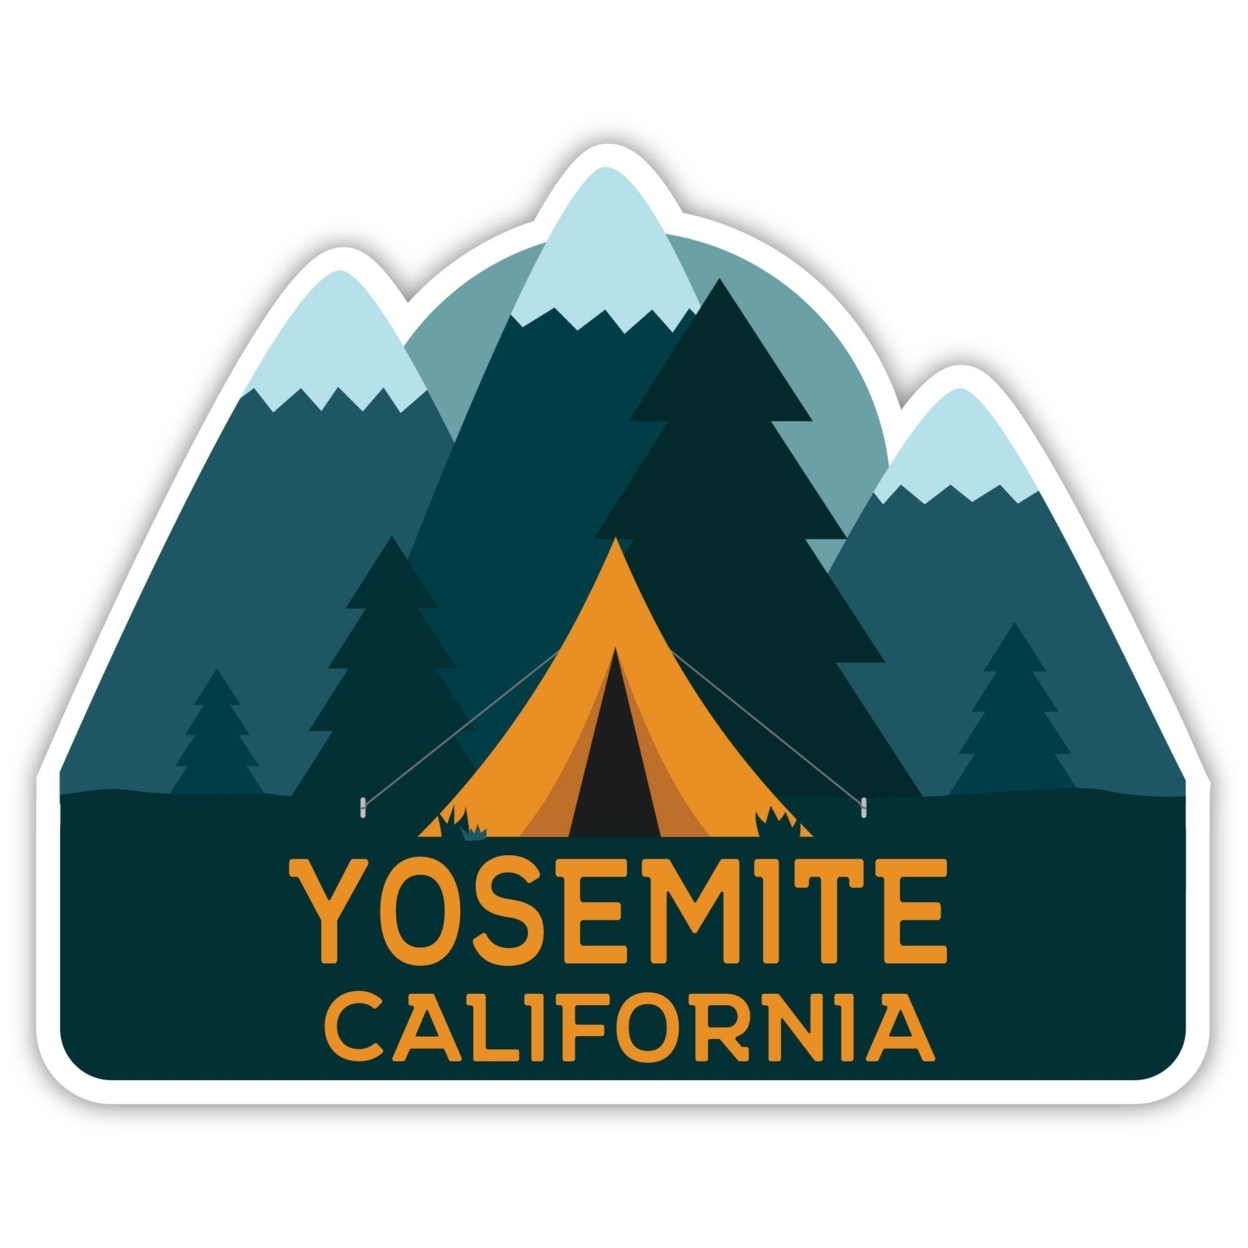 Yosemite California Souvenir Decorative Stickers (Choose Theme And Size) - Single Unit, 2-Inch, Tent